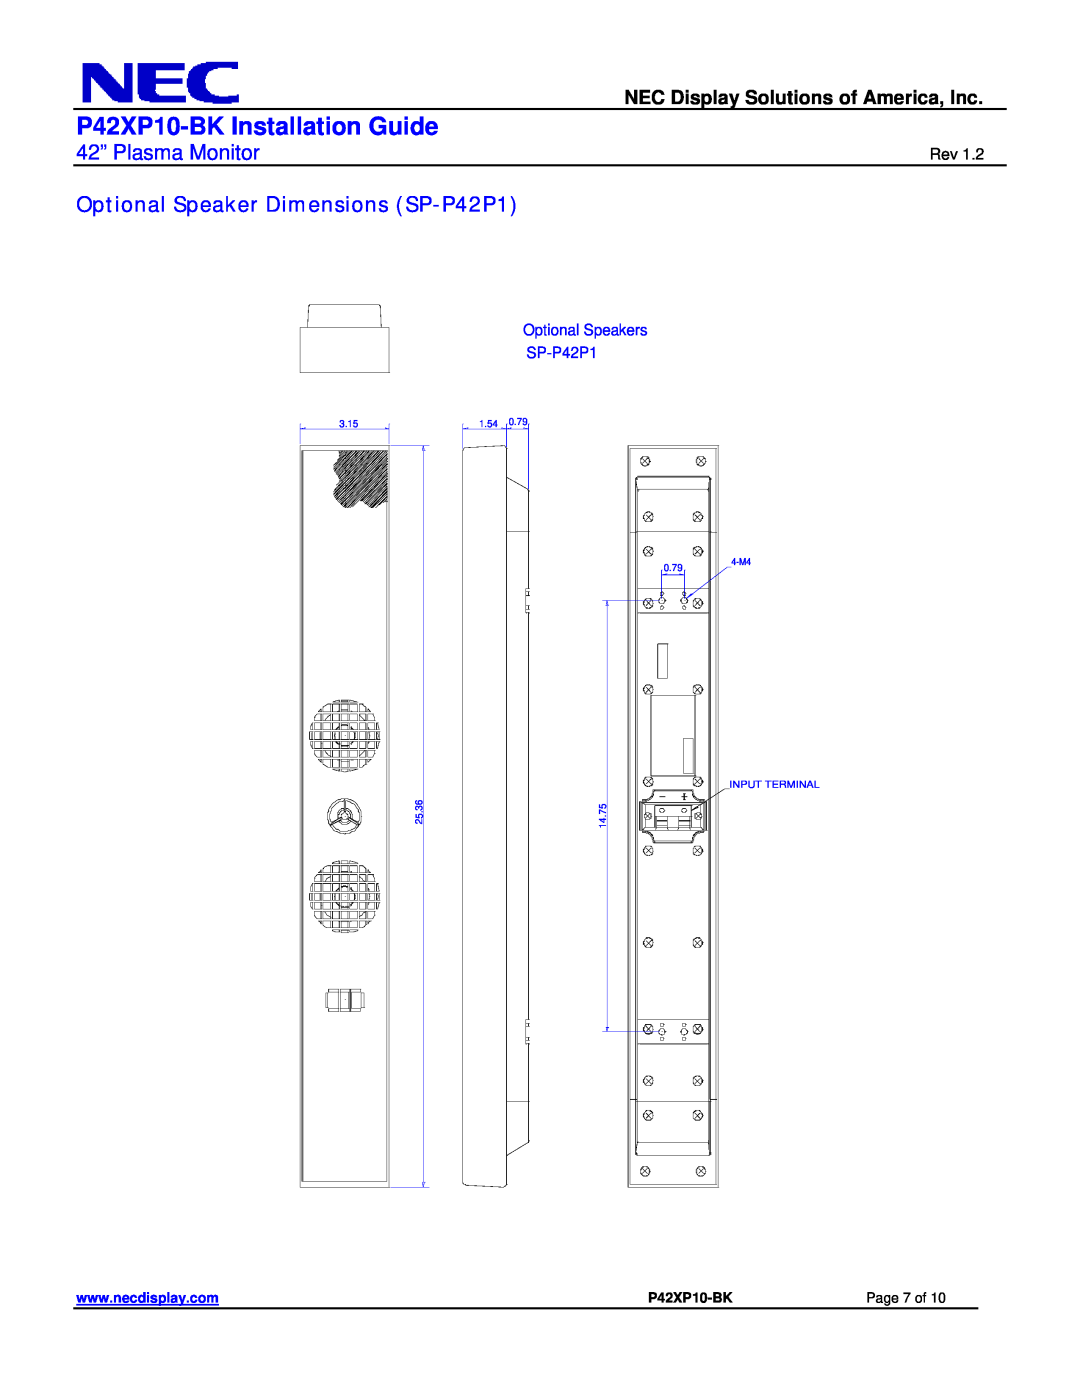 NEC Optional Speaker Dimensions SP-P42P1, P42XP10-BK Installation Guide, 42” Plasma Monitor, Optional Speakers SP-P42P1 